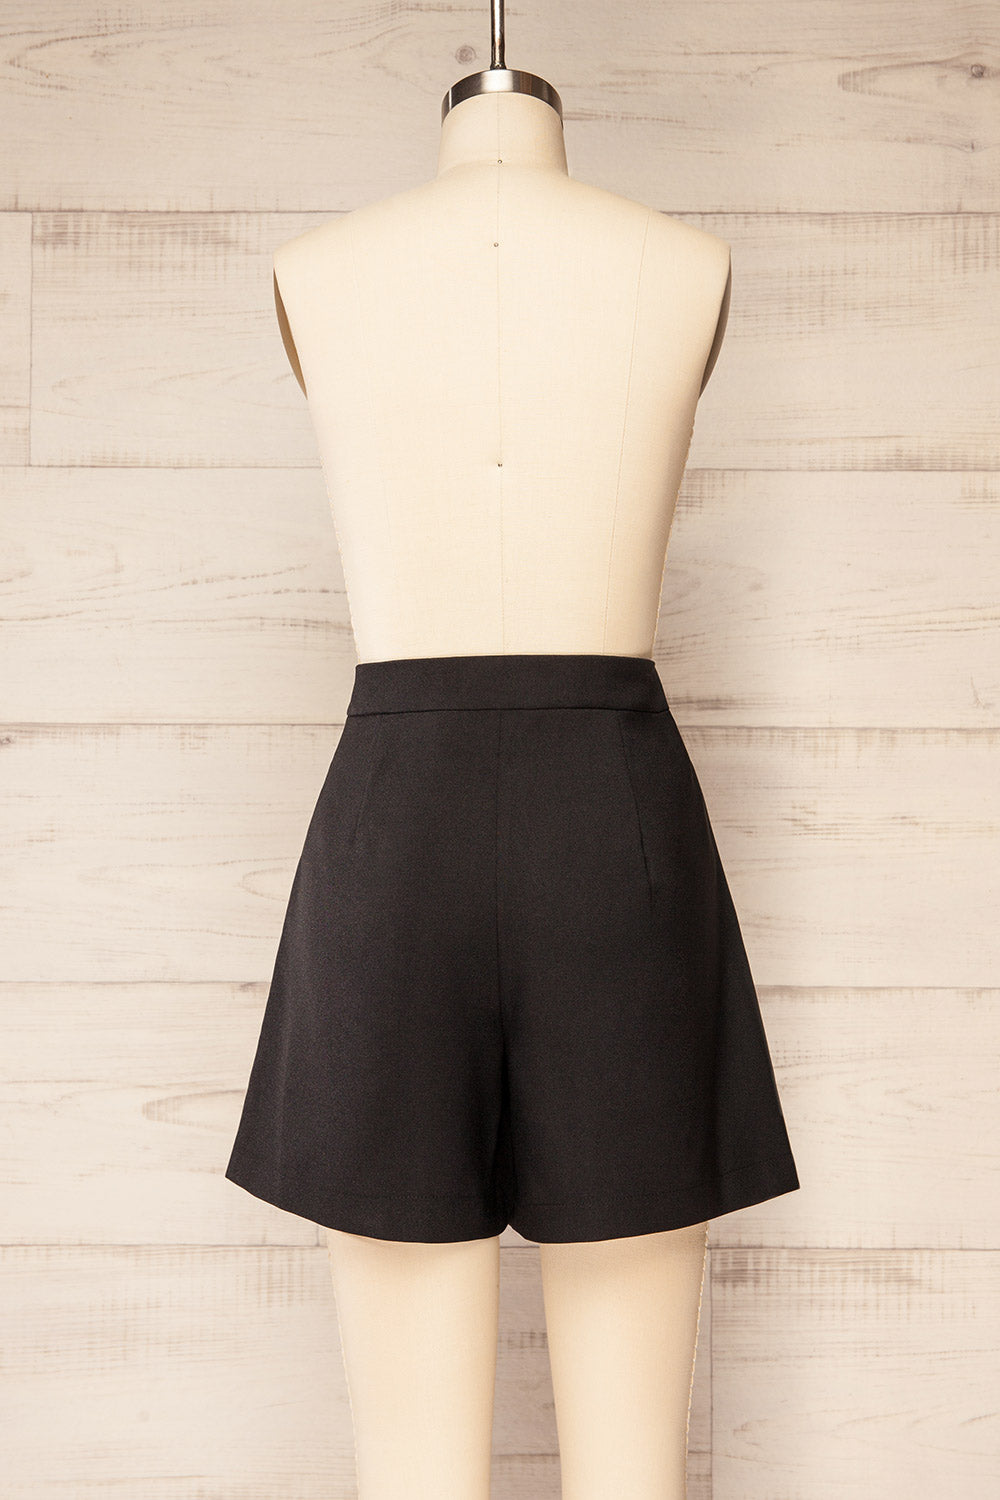 Maddox Black Shorts with Pleats | La petite garçonne back view